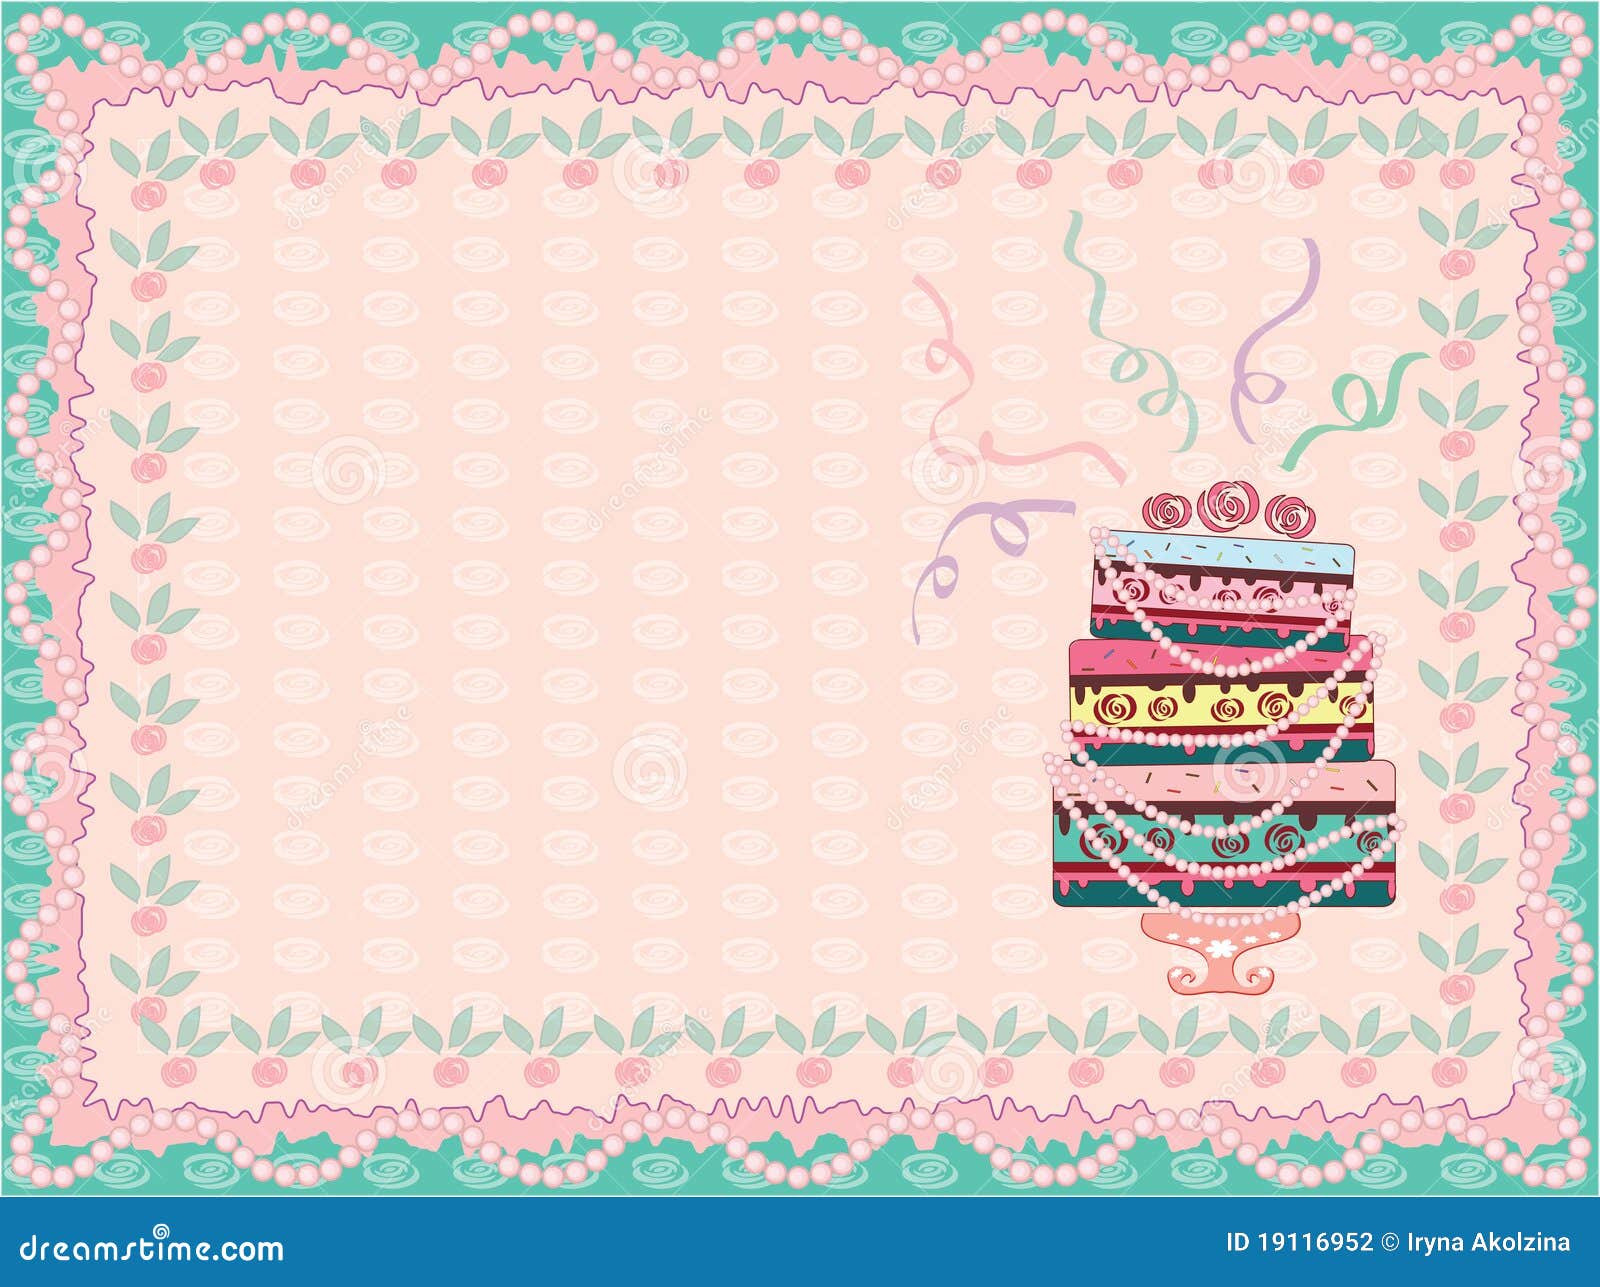 Birthday Background With Cake Stock Photography - Image: 19116952